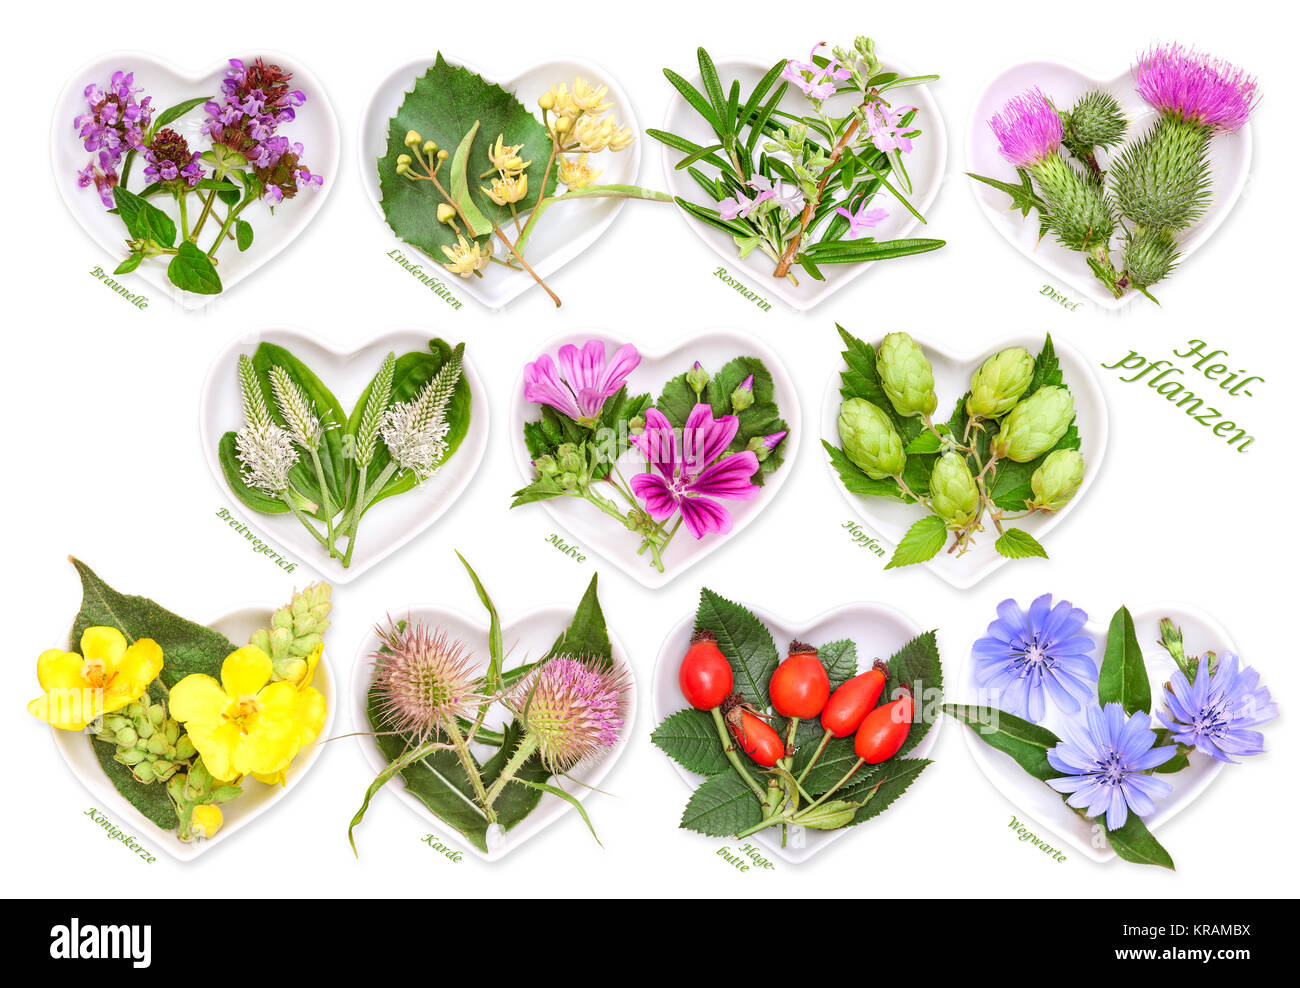 alternative medicine with medicinal plants 3 Stock Photo